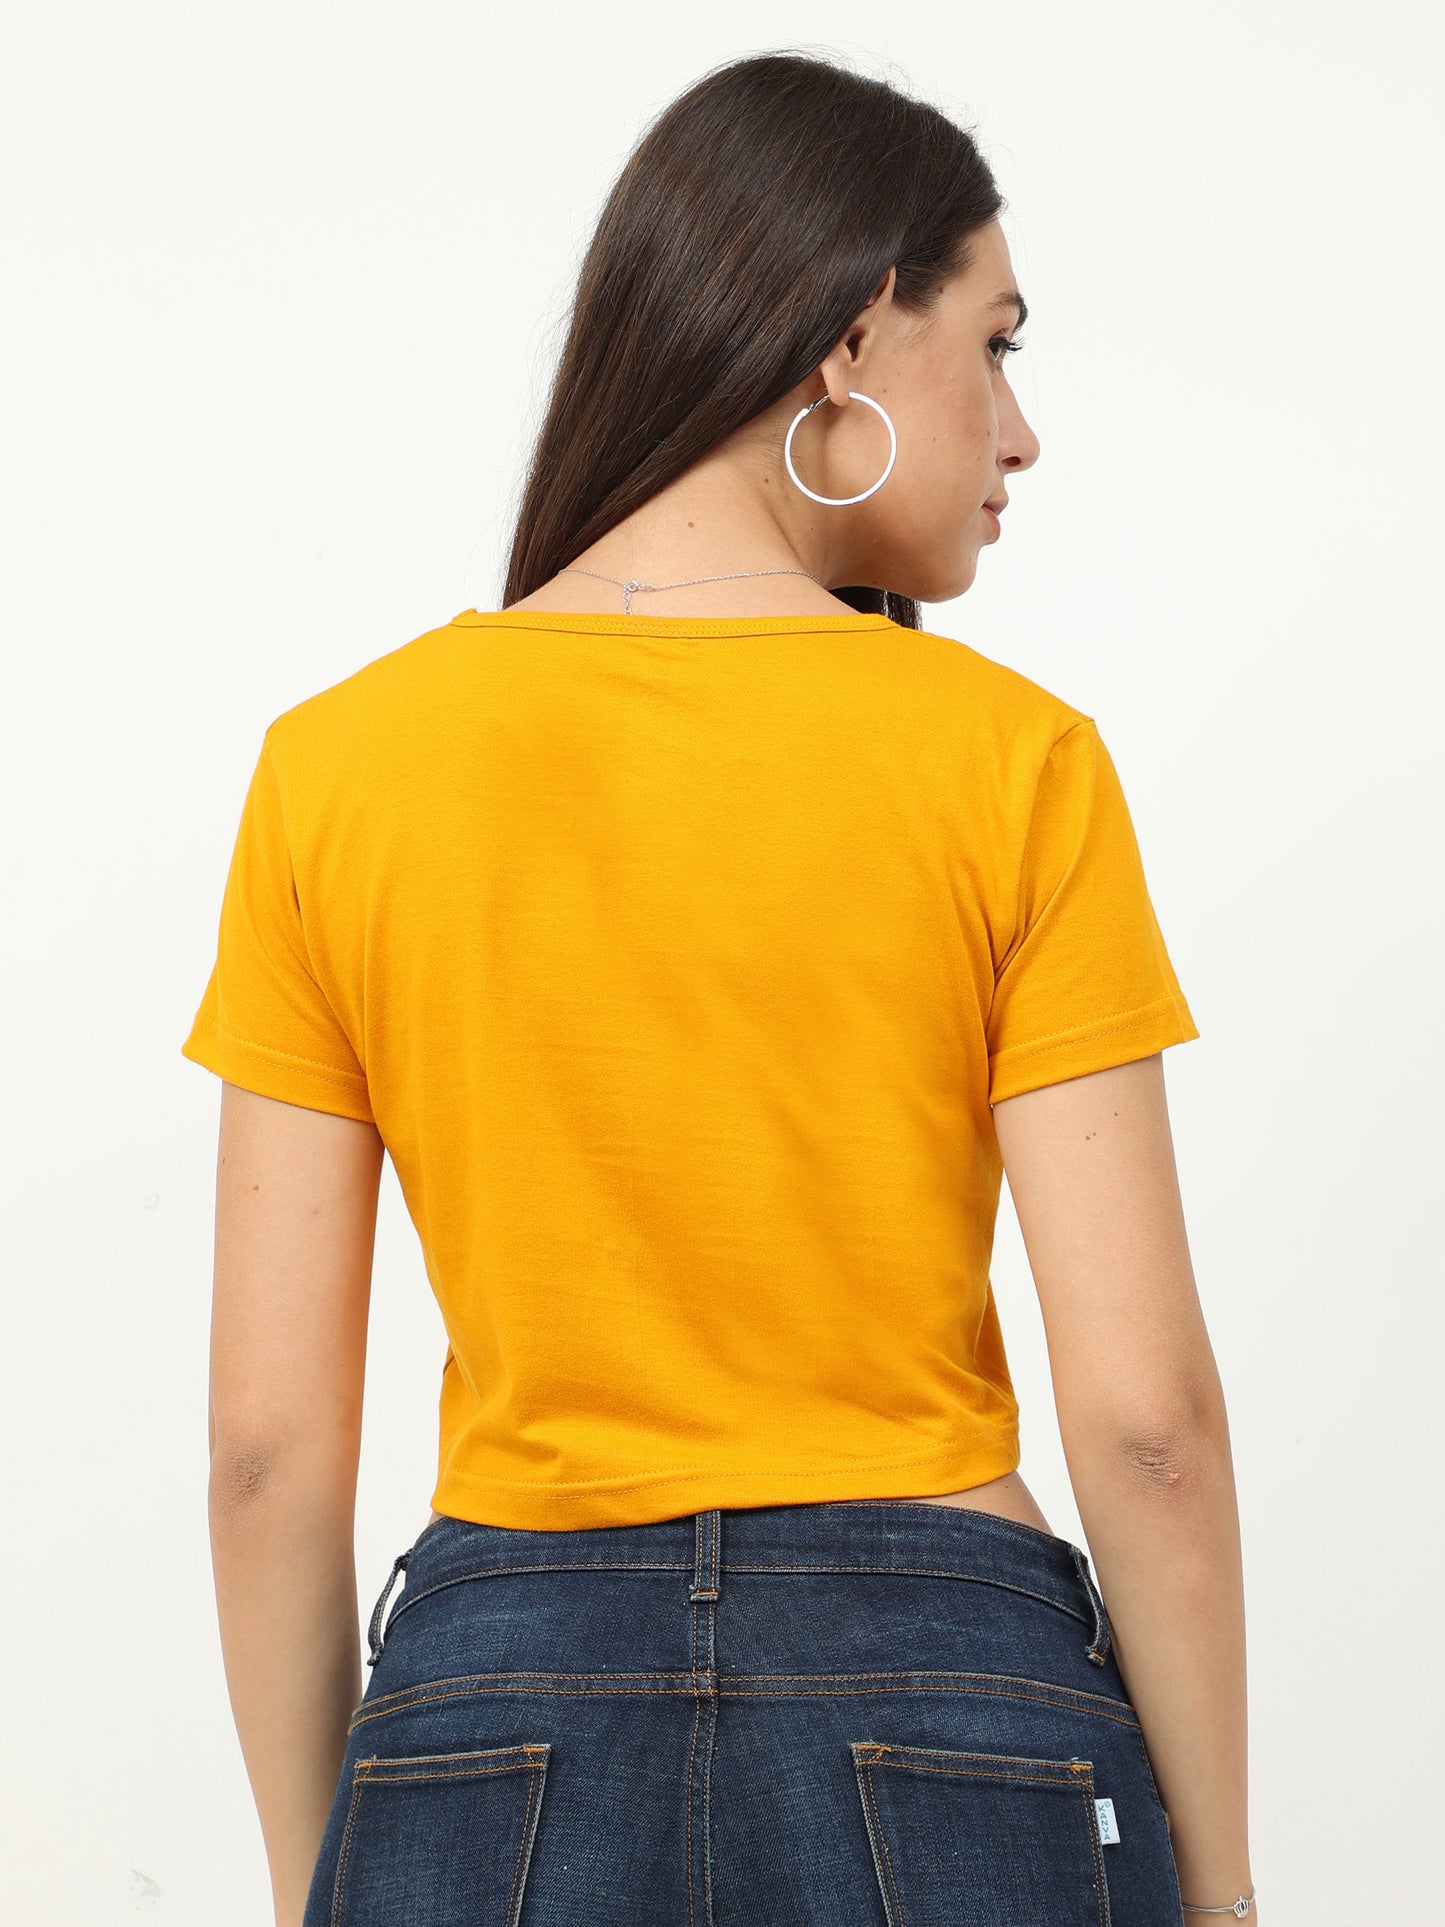 Women's Cotton Plain Round Neck Mustard Yellow Color Crop Top